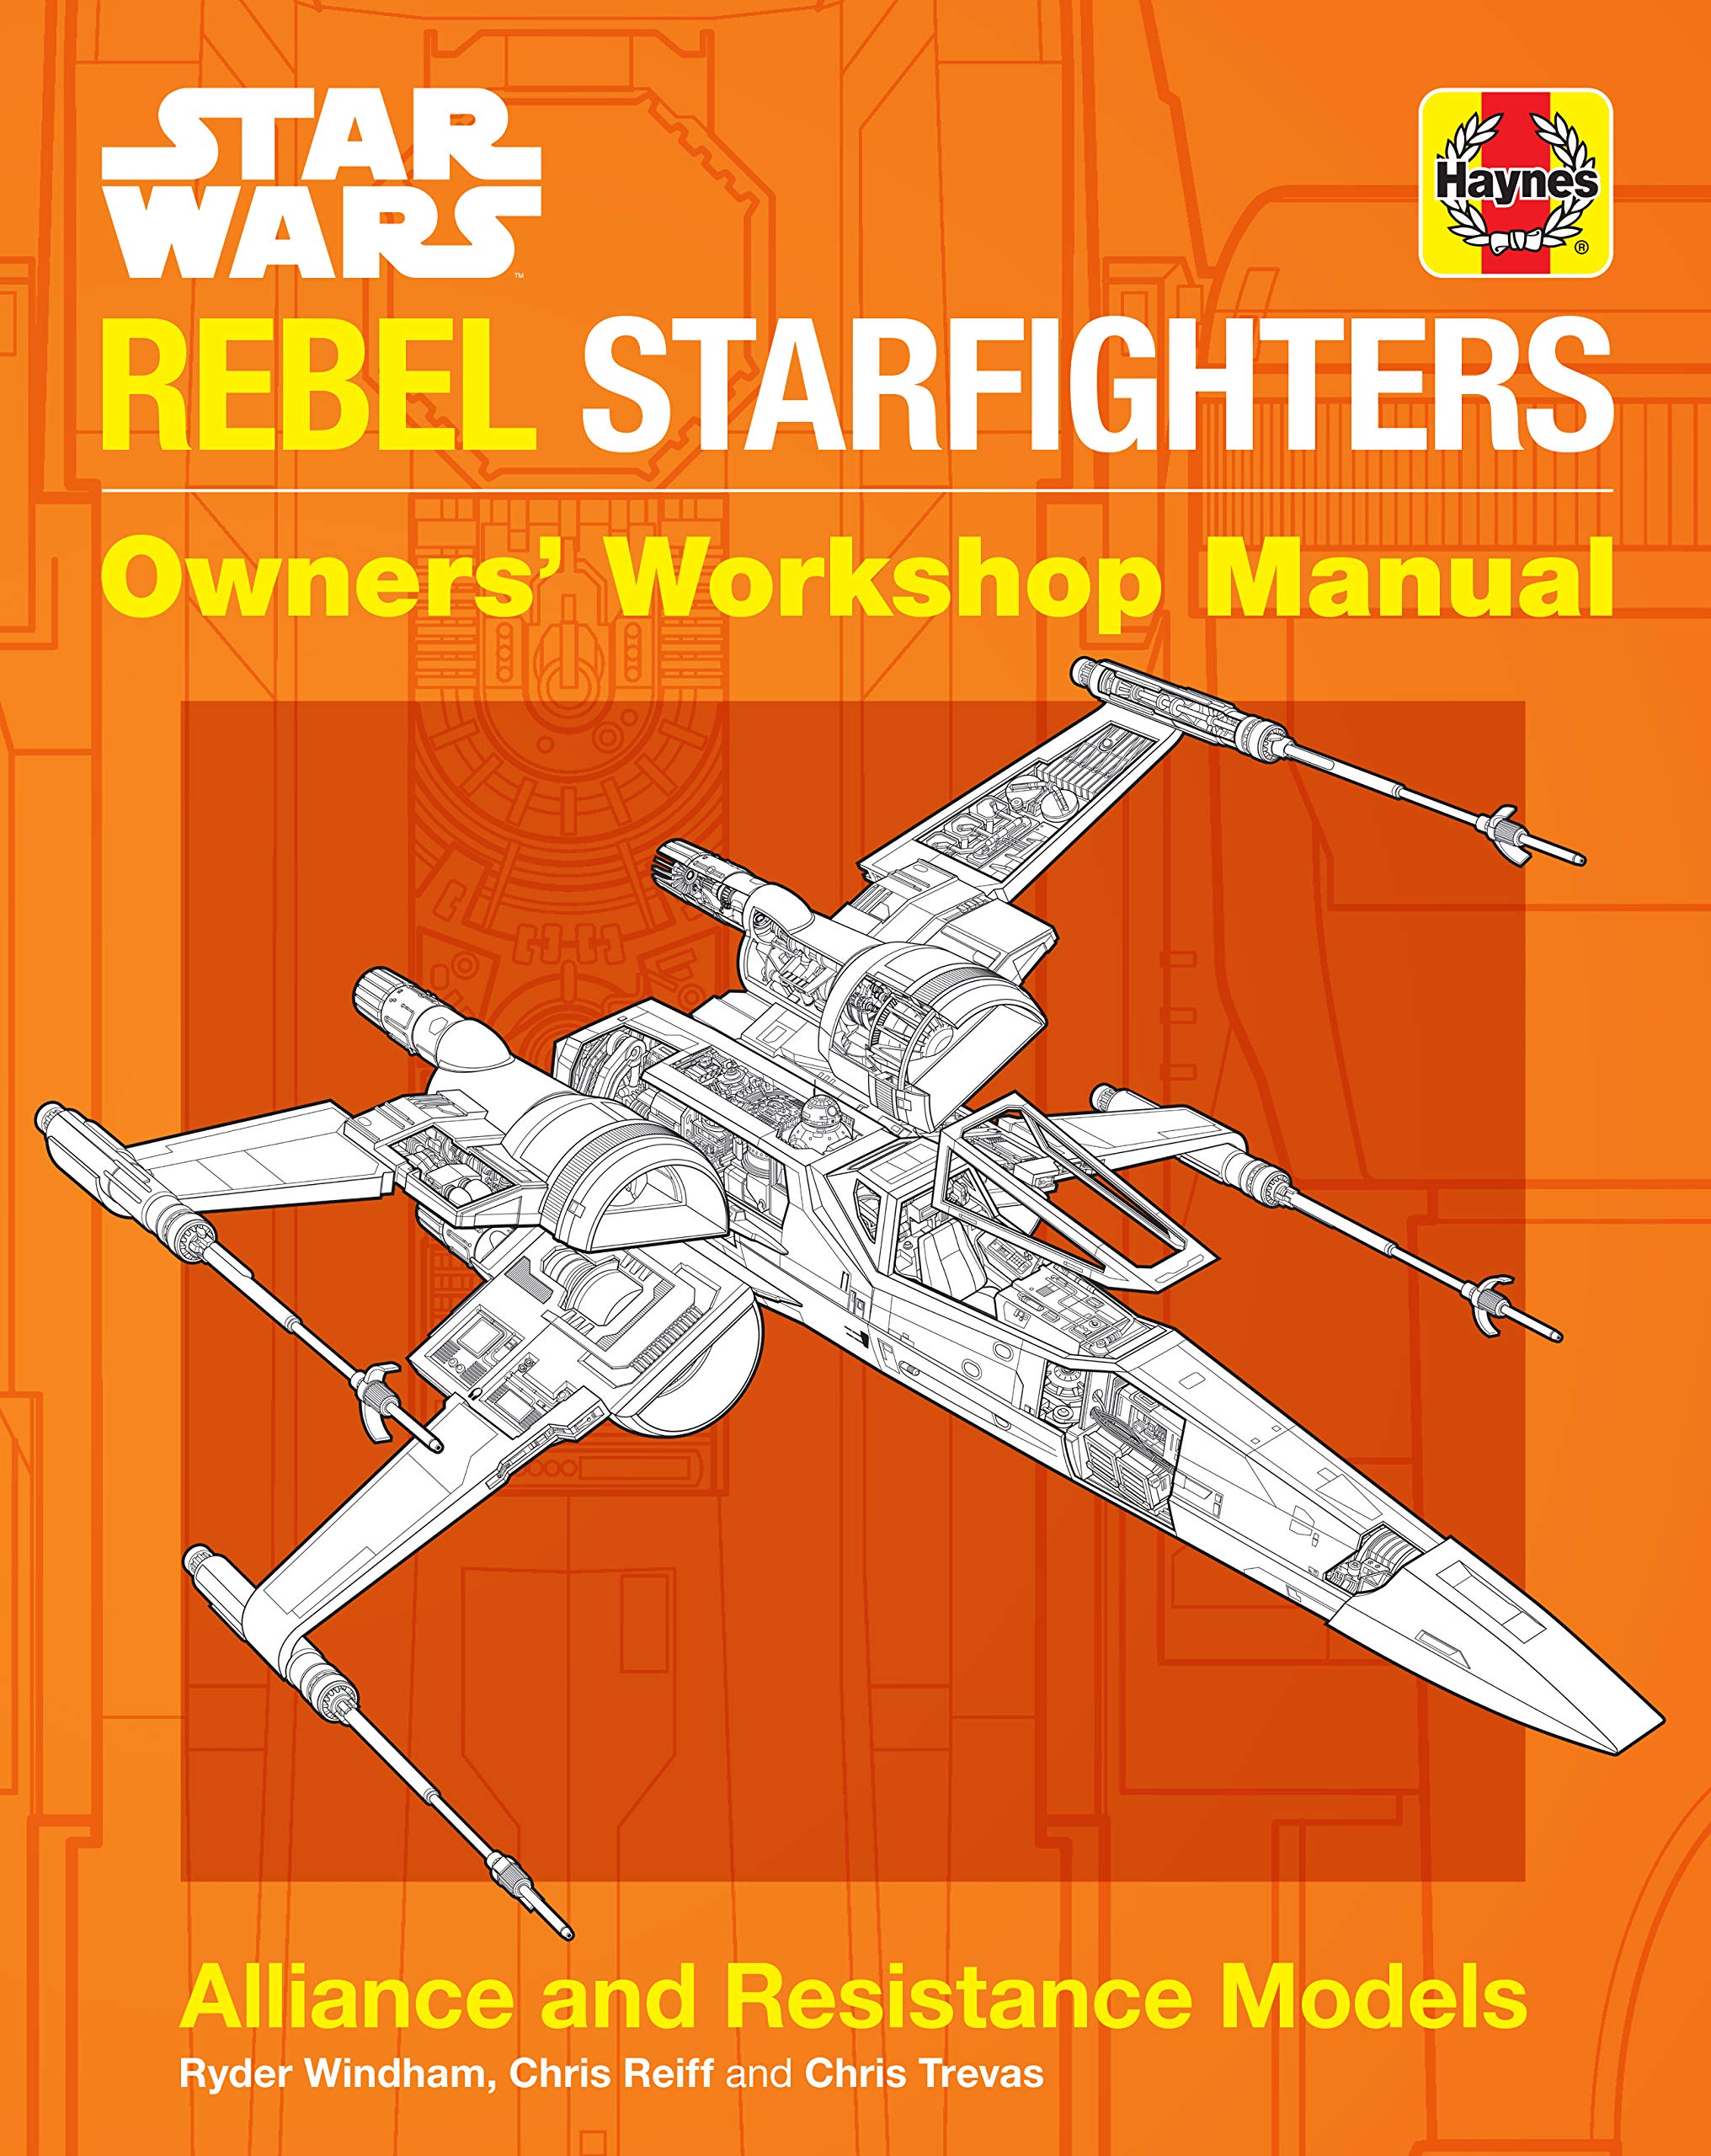 Star Wars Rebel Starfighter